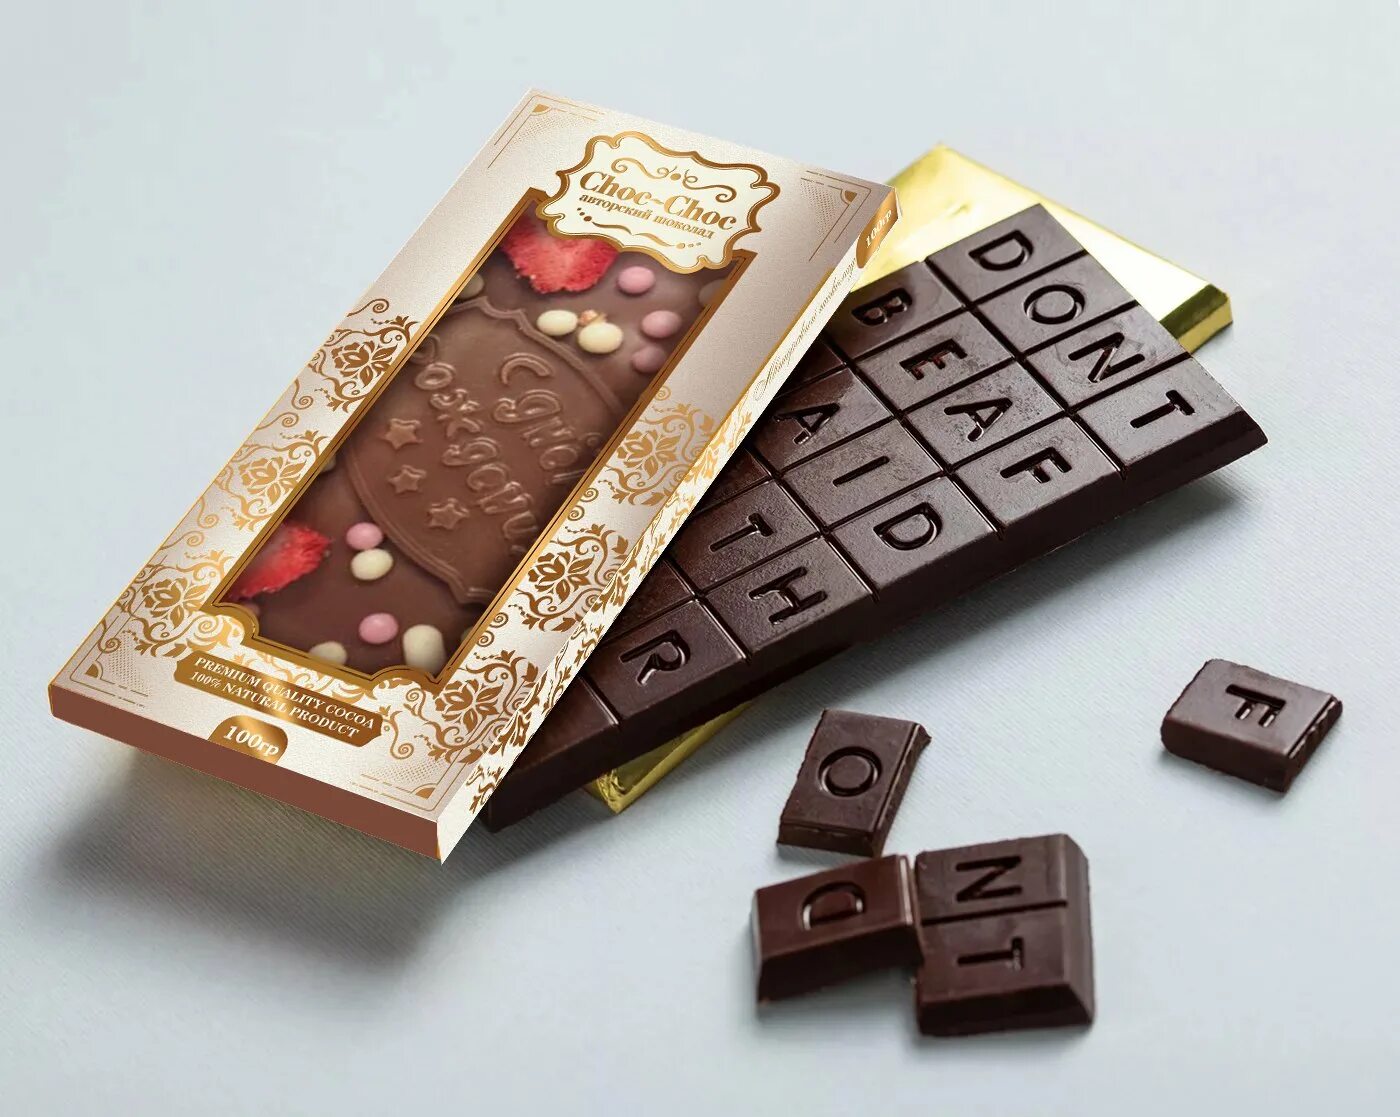 Пачки шоколада. Шоколад в упаковке. Плитка шоколада в упаковке. Плиточный шоколад. Упаковка для шоколадной плитки.